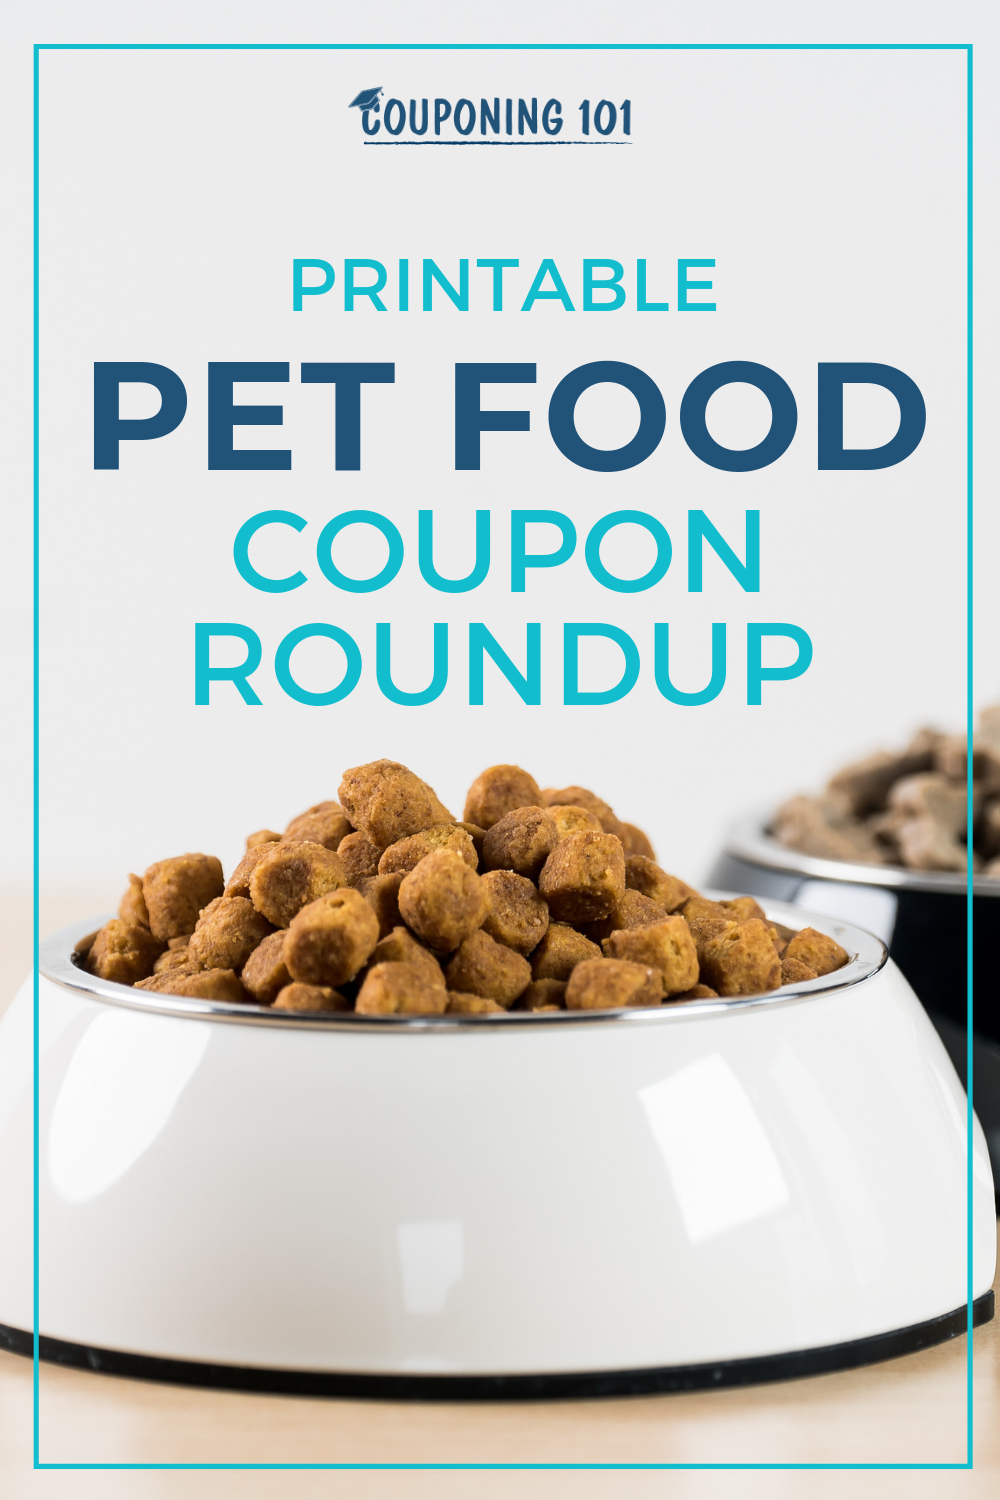 Free Printable Pet Coupons Roundup | Budget-Friendly Pet Care - Free Printable Dog Food Coupons